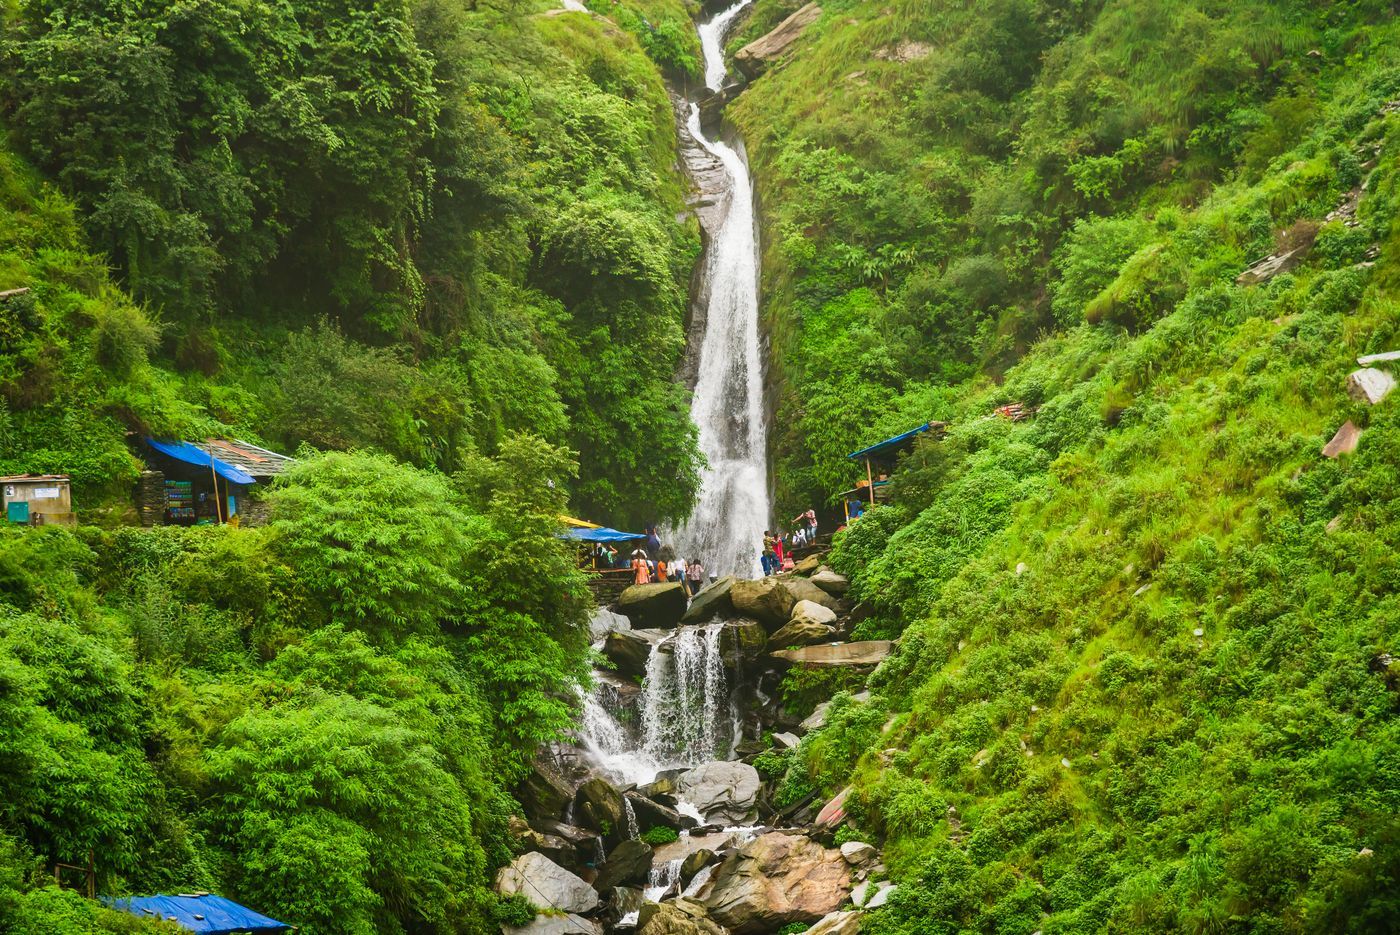 Tourists enjoying the Bhagsu Nag waterfall and surrounding greenery 